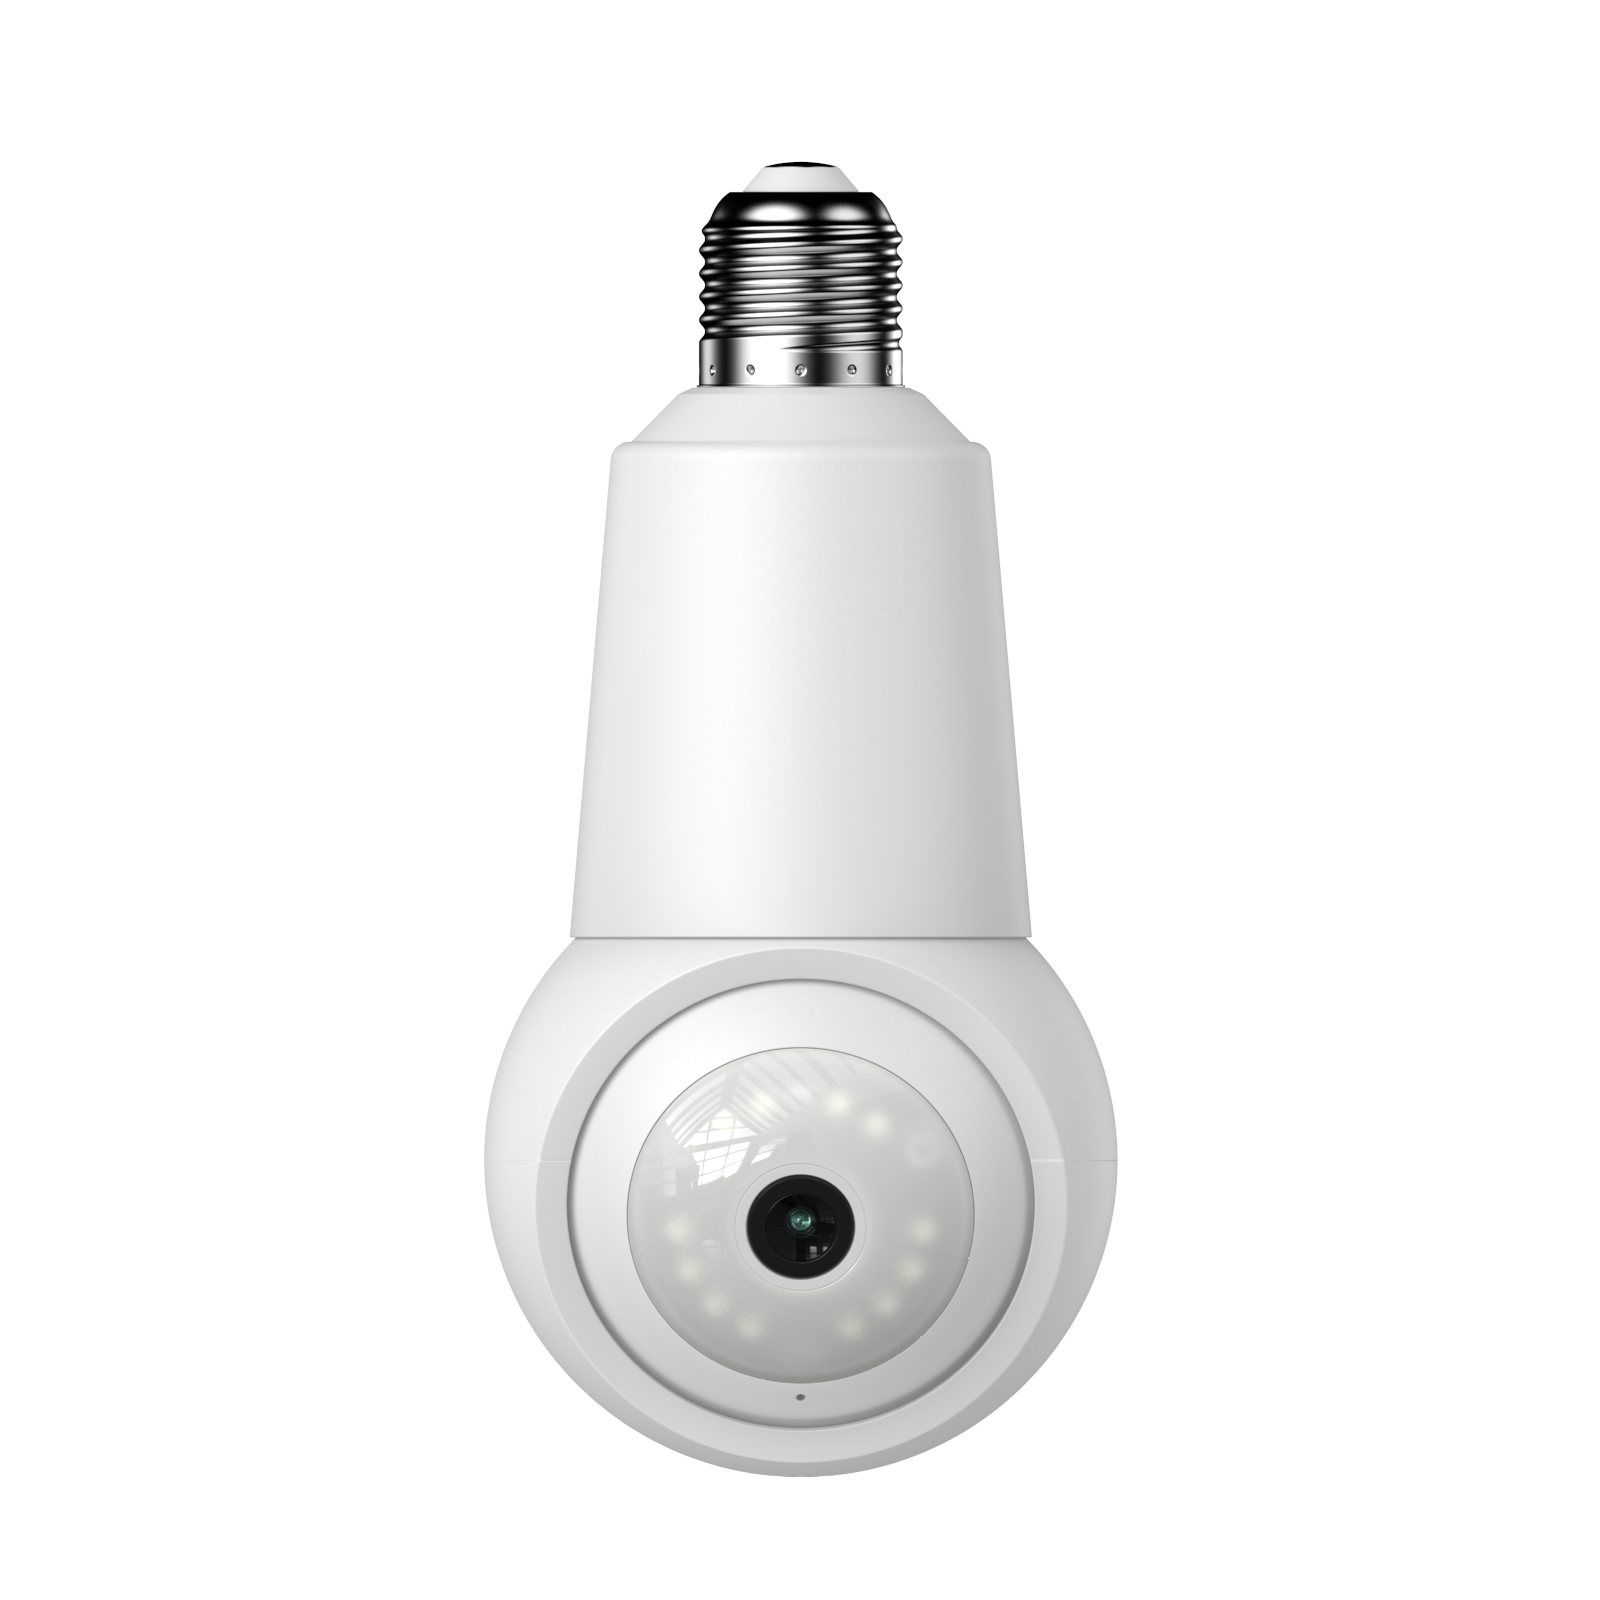 Mology 4MP Bulb Security Camera 2.4GHz